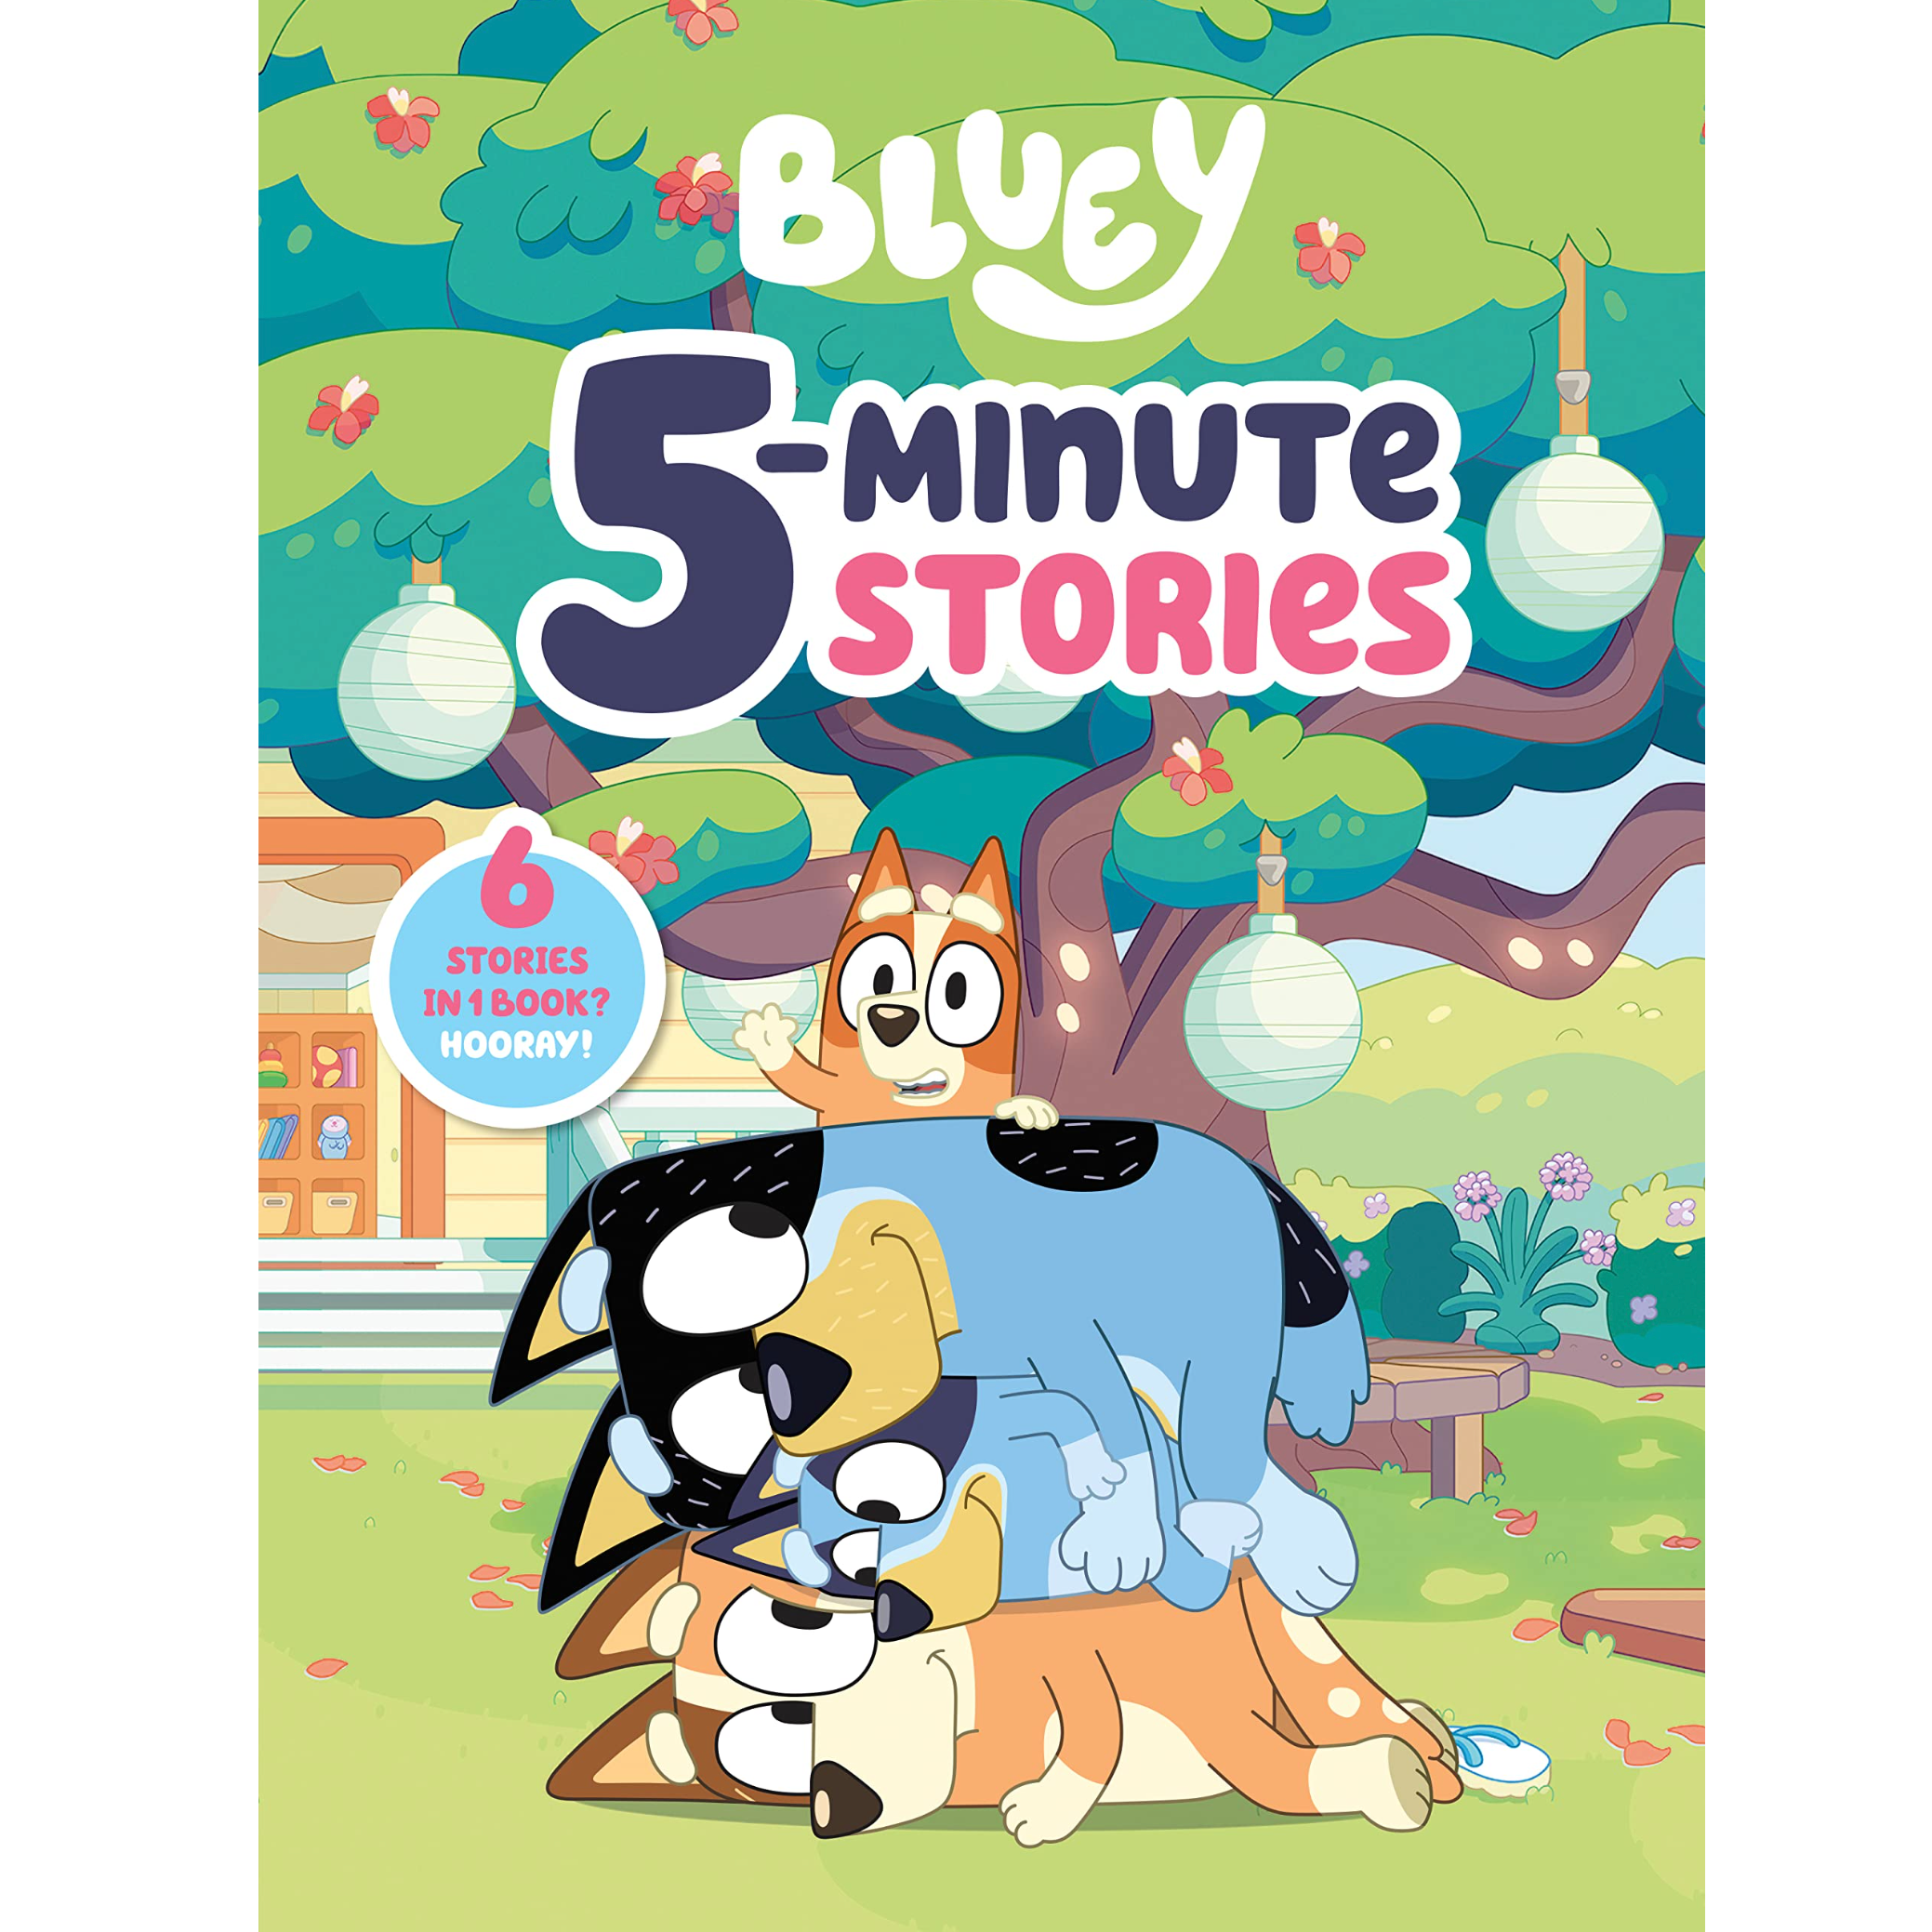 Bluey: 5 Minute Stories